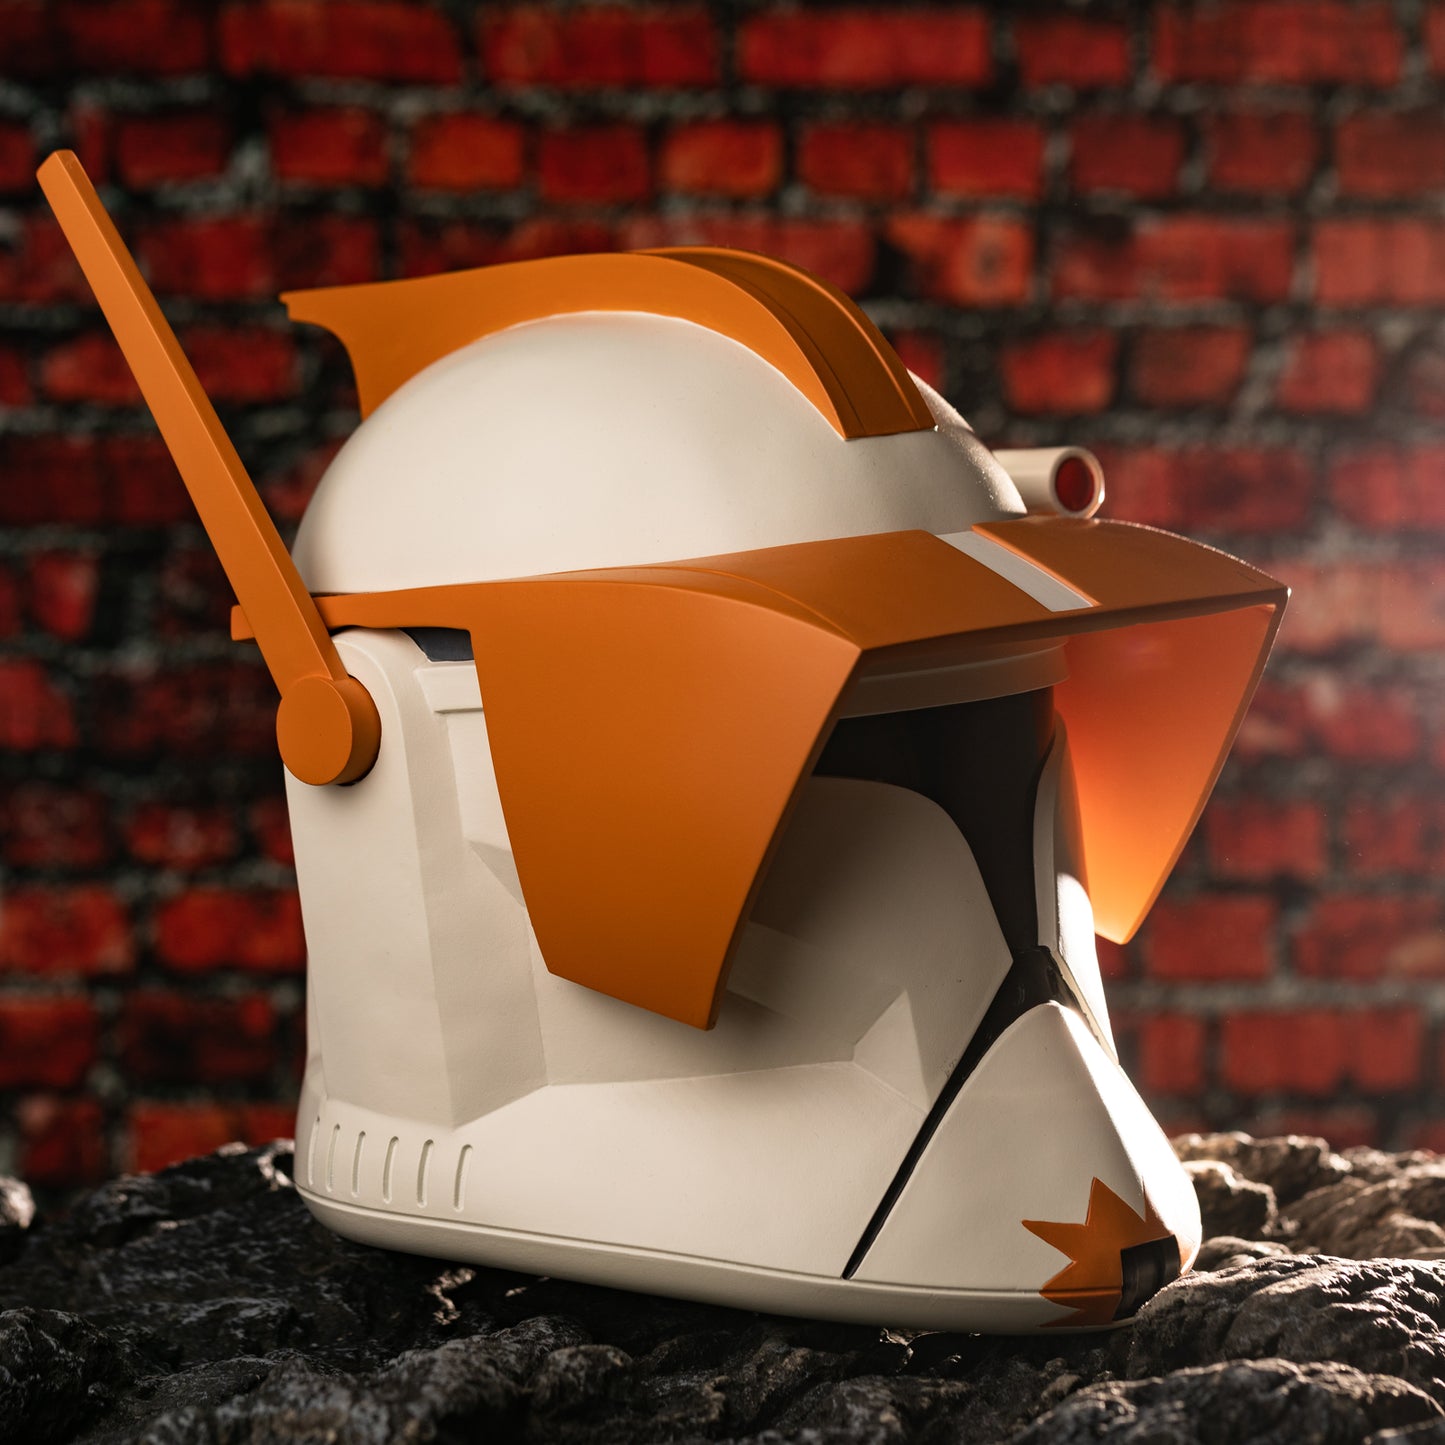 Xcoser Star Wars: Clone Trooper Commander Cody Helm Phase 1 Cosplay Prop Resin Replik